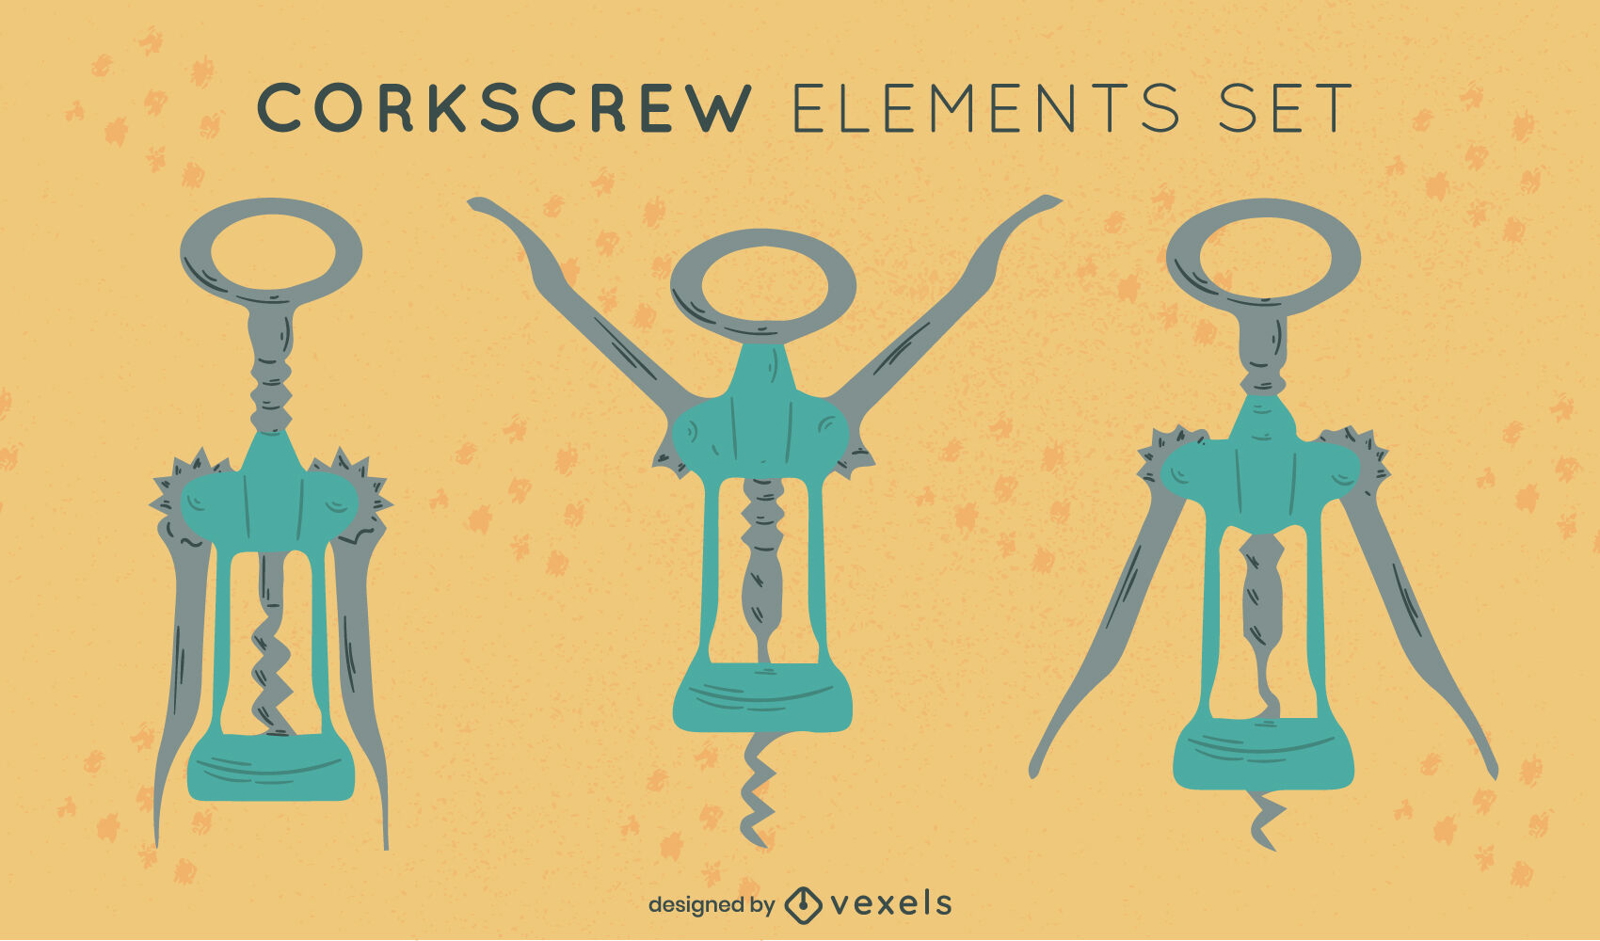 Corkscrew element set 